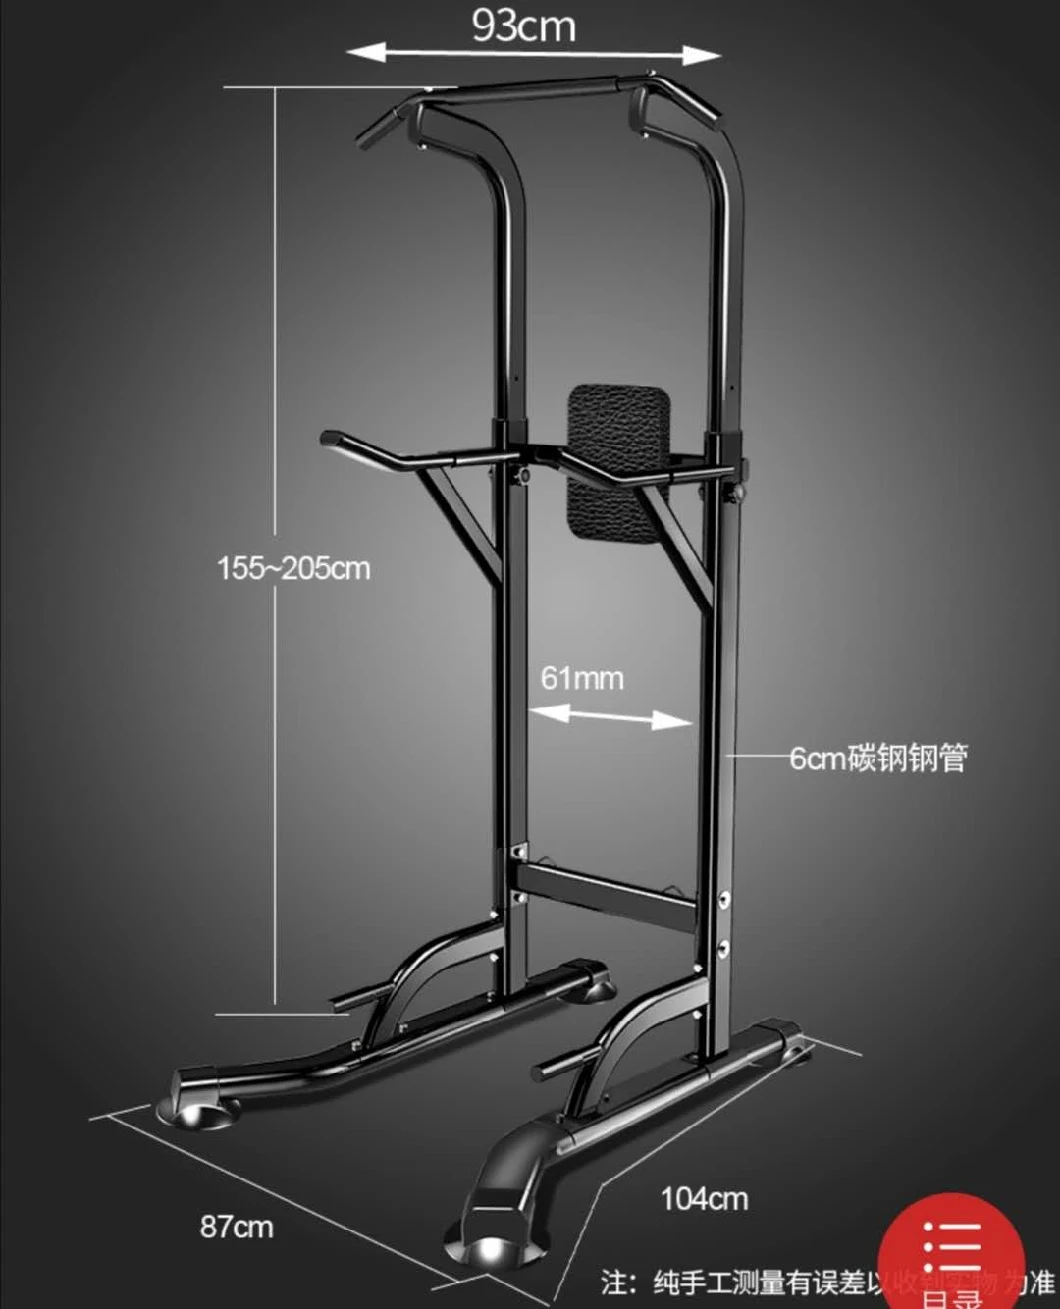 Household Multi-Function Silent Fitness Equipment Training Electric Folding Treadmill